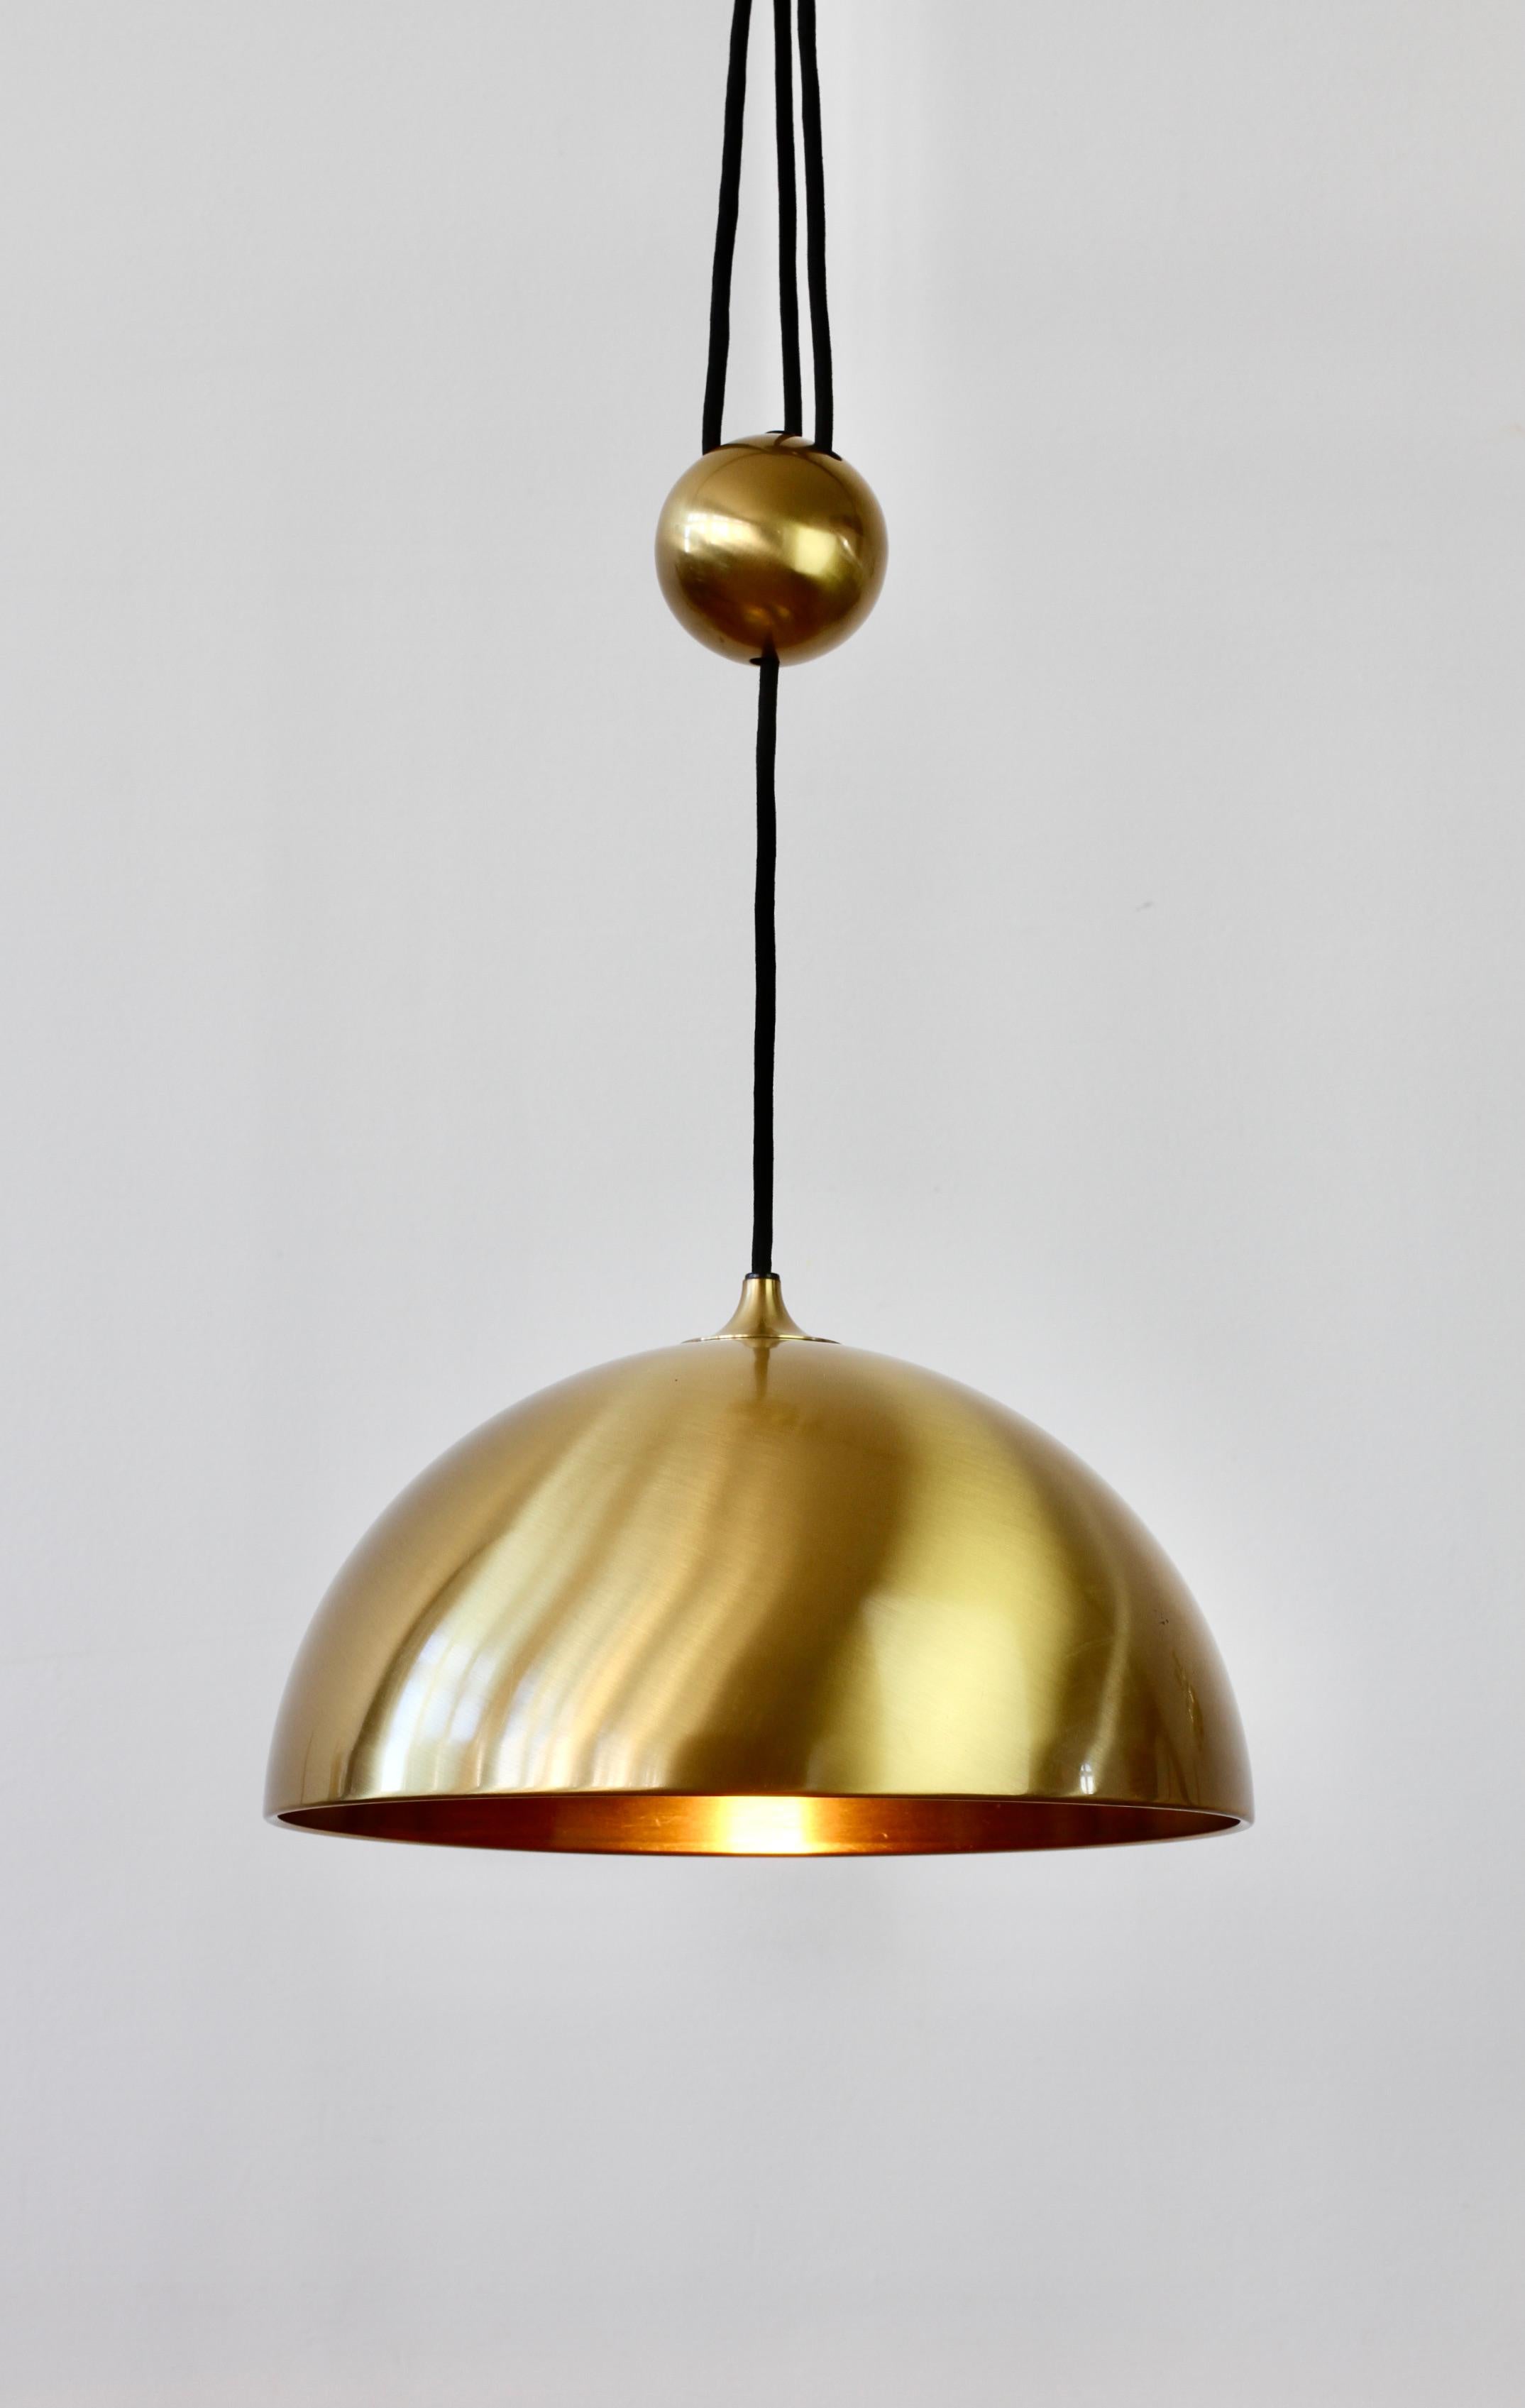 German Florian Schulz Vintage Modernist Brass Counterbalanced Adjustable Pendant Light For Sale